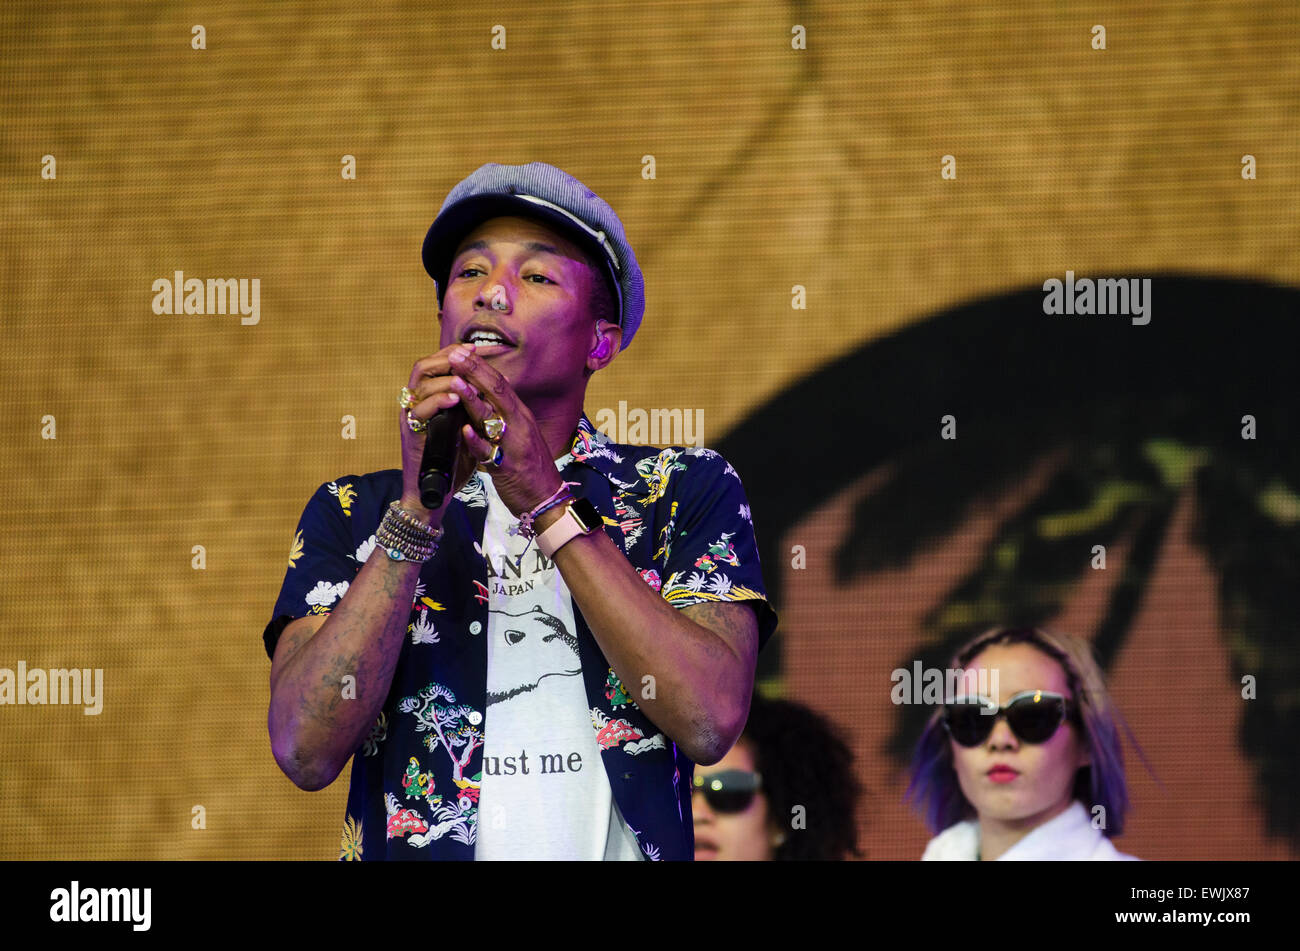 Glastonbury Festival, UK. 27th June, 2015. Pharrell Williams performs live on the Pyramid stage at Glastonbury Festival on Saturday evening, before headline act Kanye West. Stock Photo